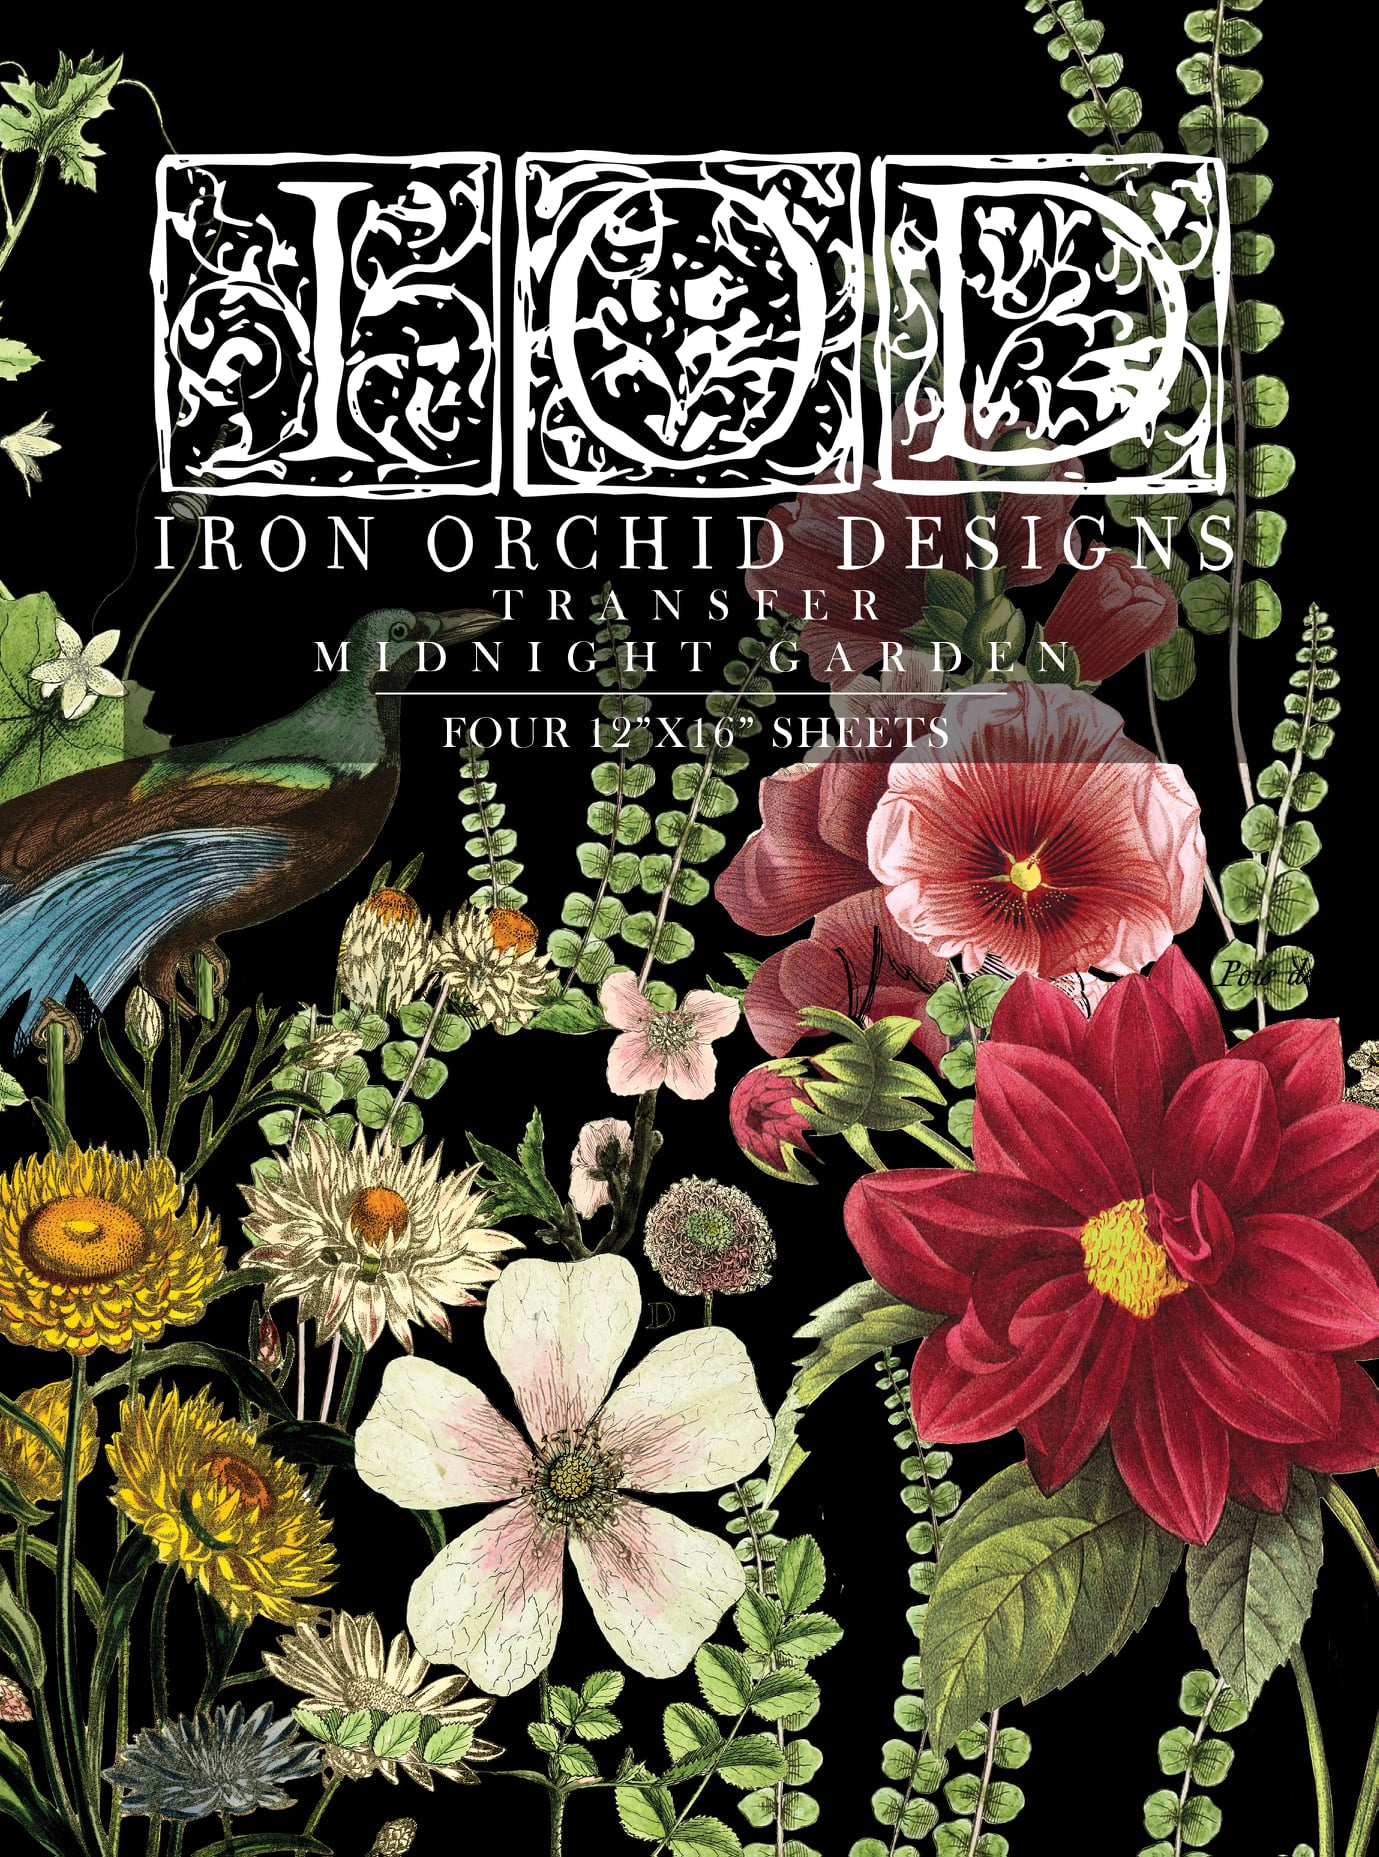 Iron Orchid Design | Transfer | Midnight Garden